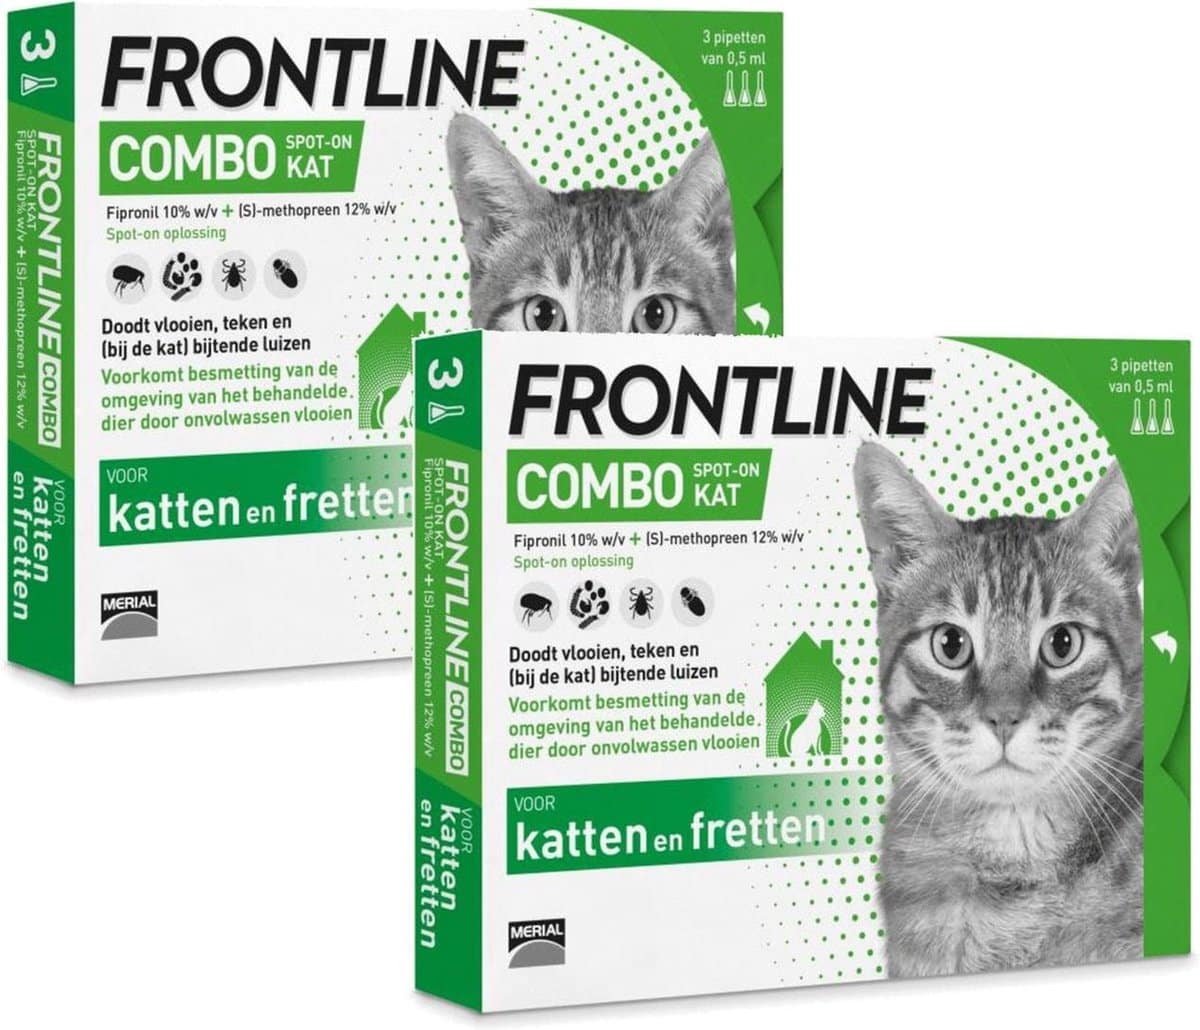 Frontline Combo Katze-2